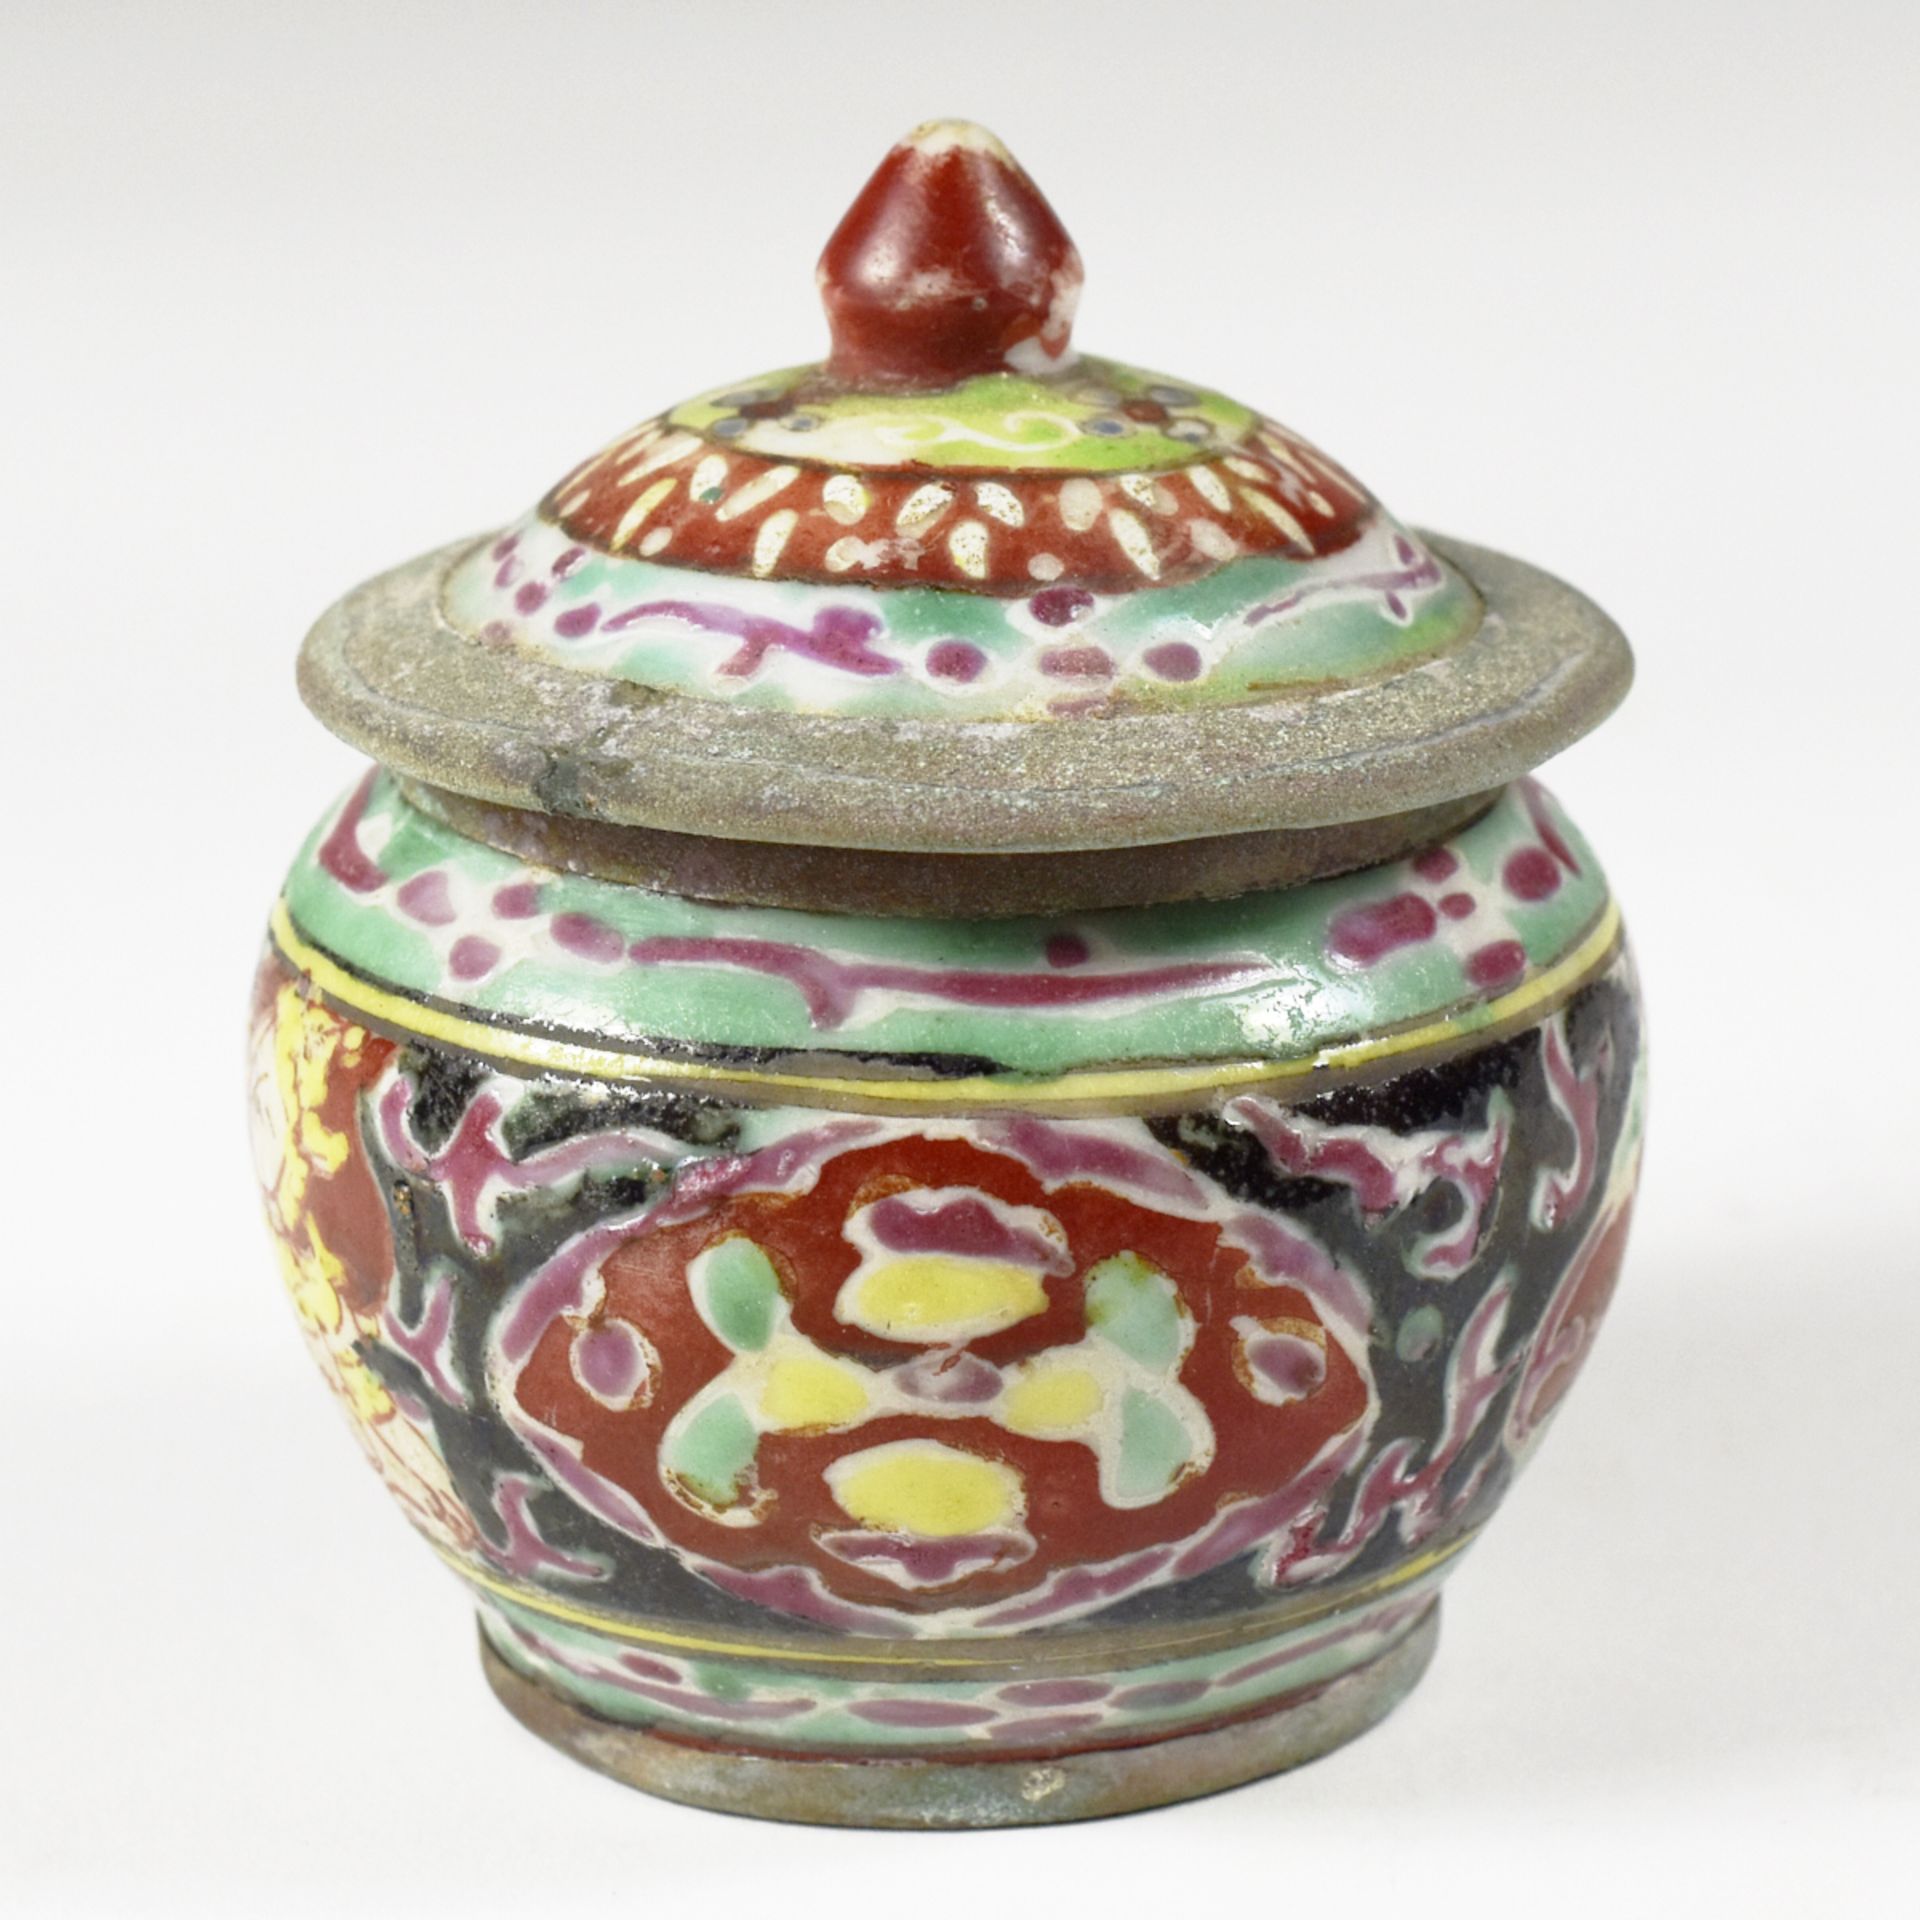 Bencharong Porcelain Lidded Pot - Image 2 of 8